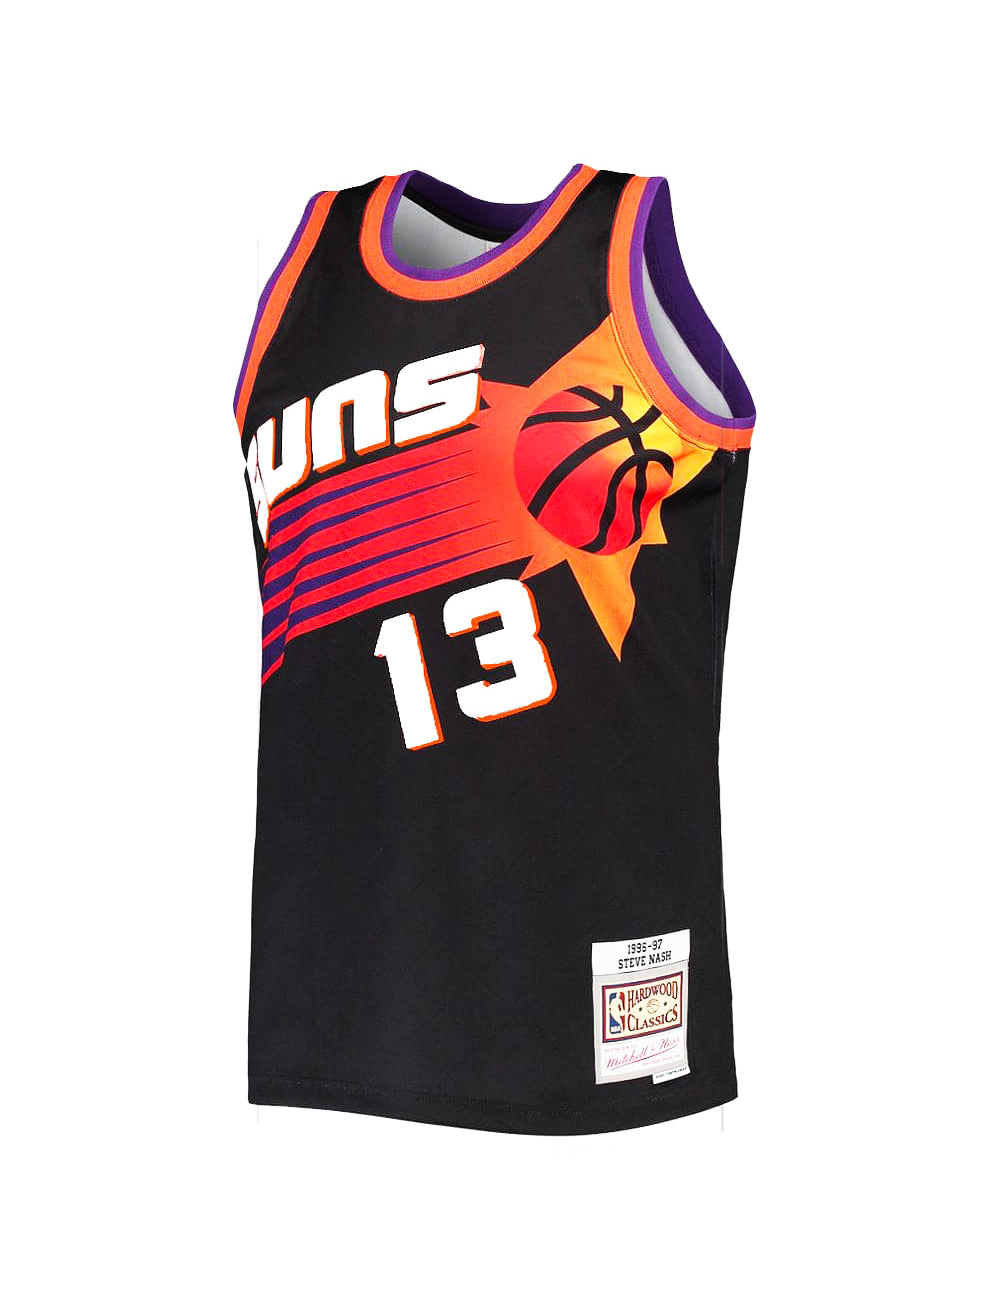 Mens Mitchell & Ness NBA Striped Swingman Jersey 1996 Phoenix Suns Steve  Nash